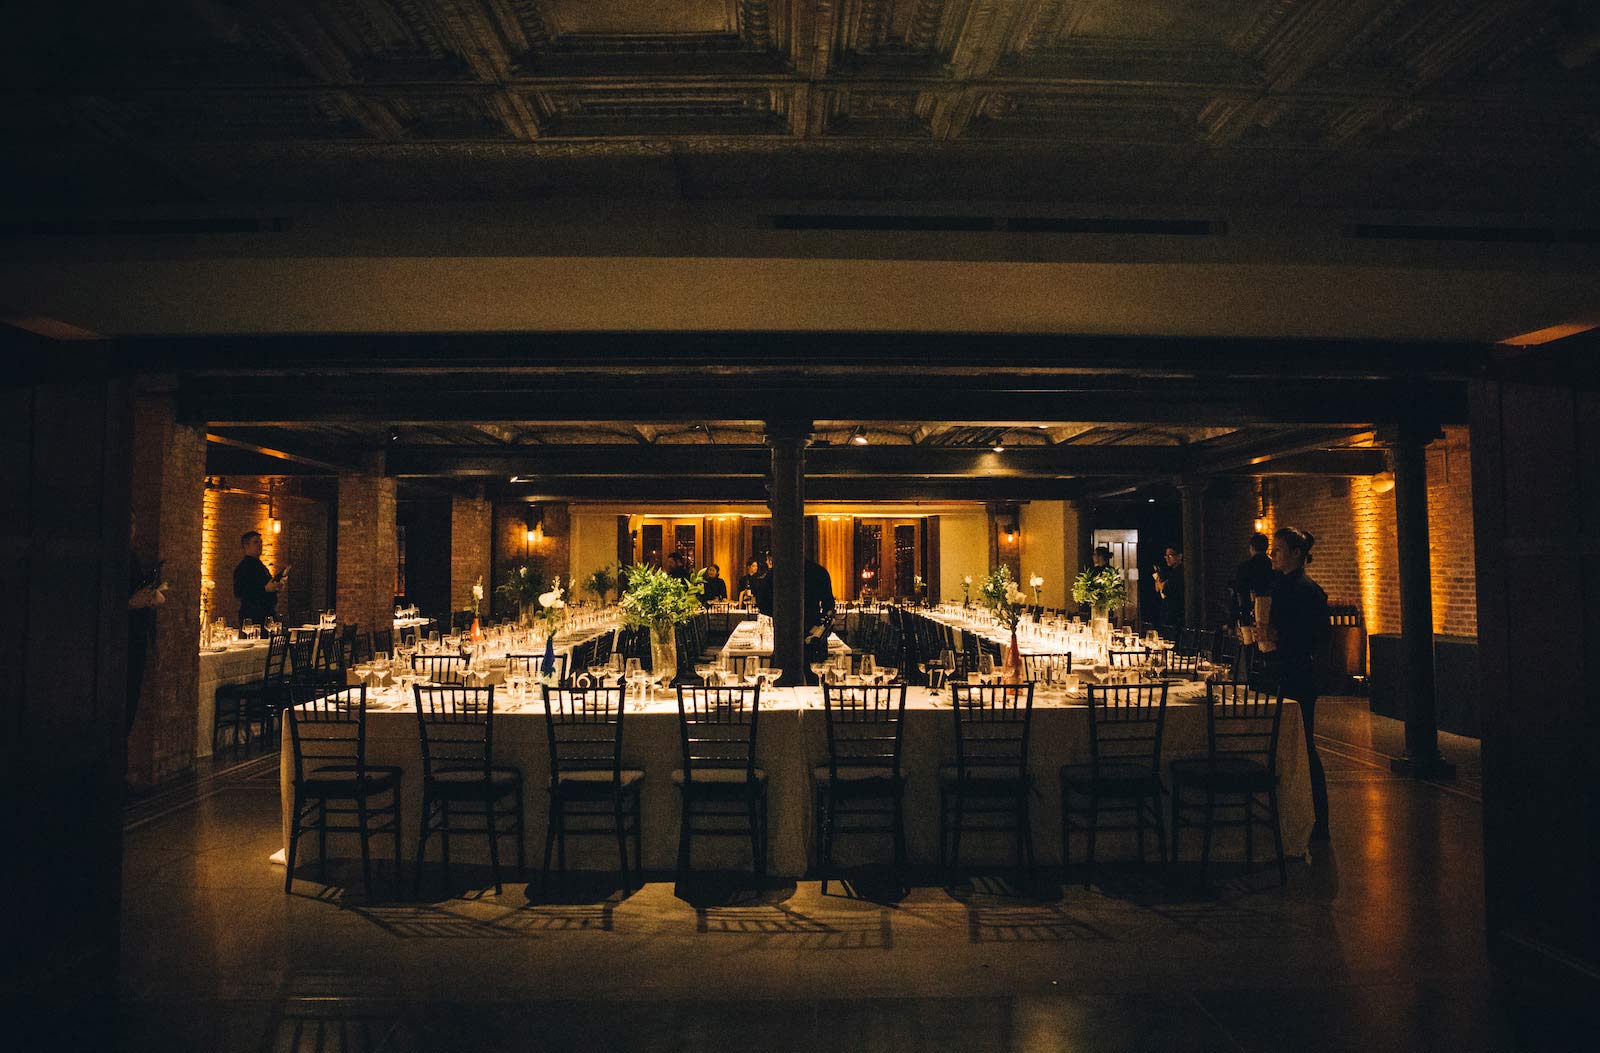 Wedding reception table setting at the Weylin in NYC